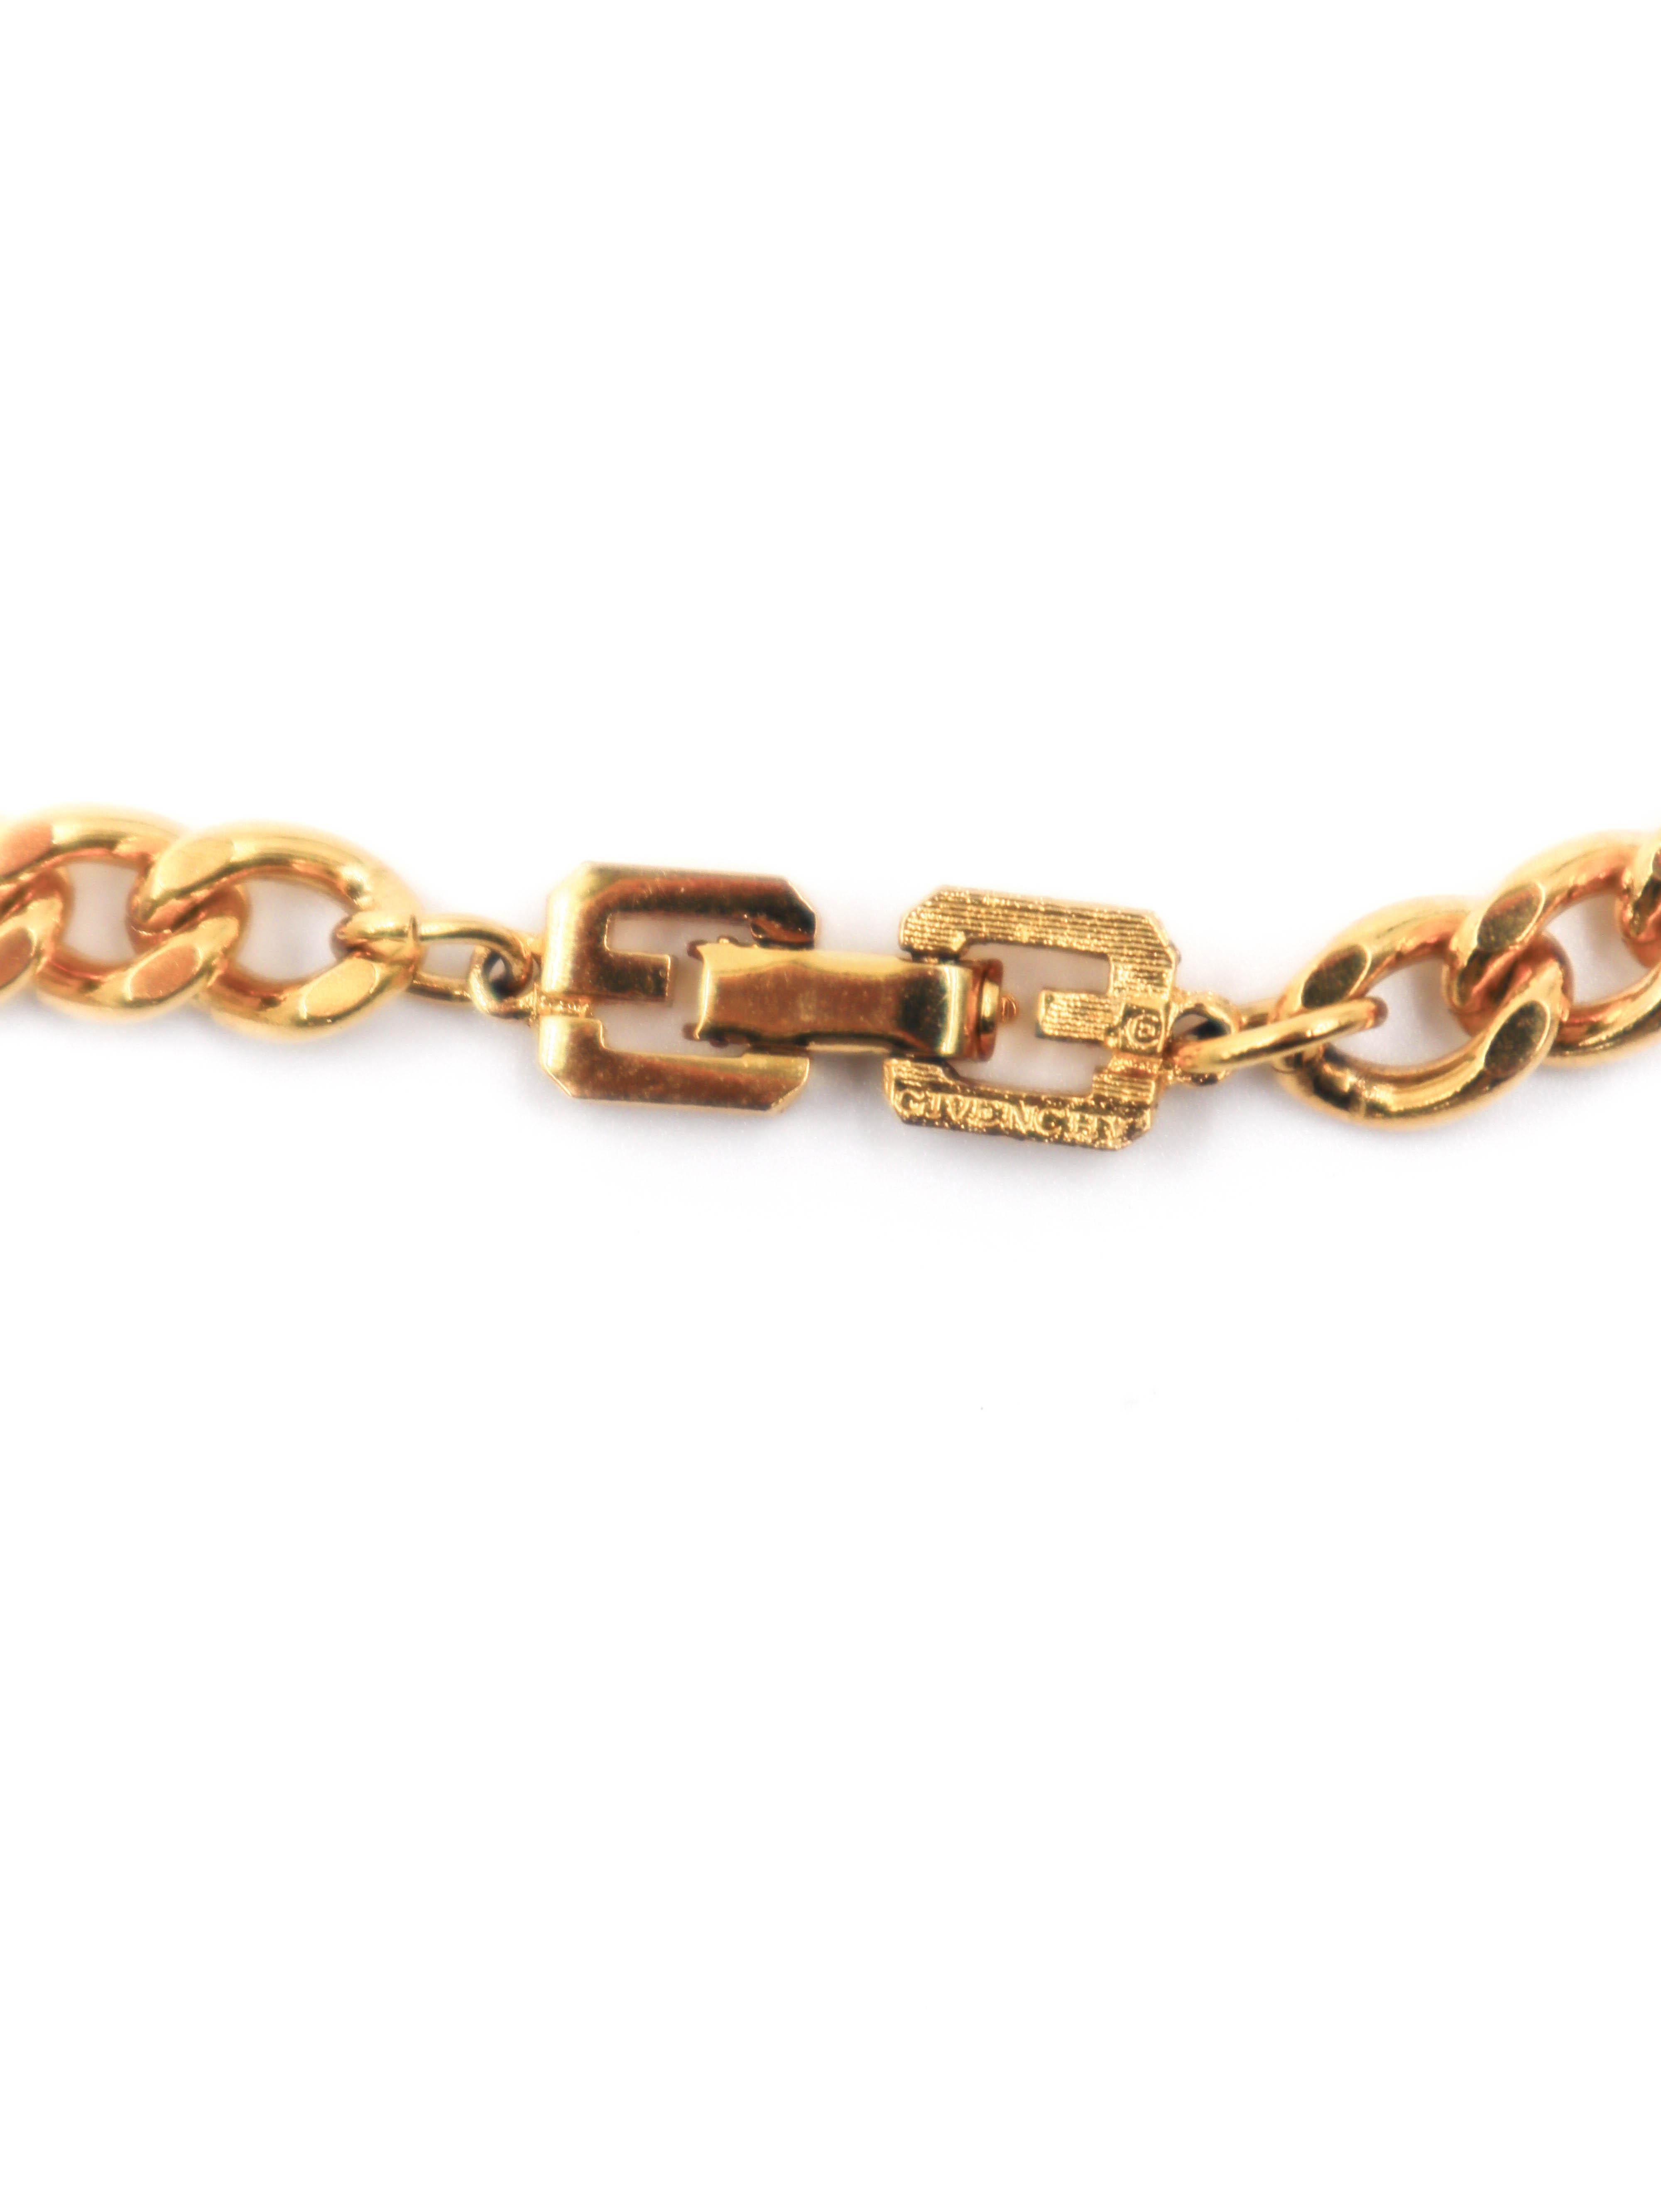 Etruscan Revival Givenchy Vintage ENAMEL Gold Long CHAIN NECKLACE For Sale